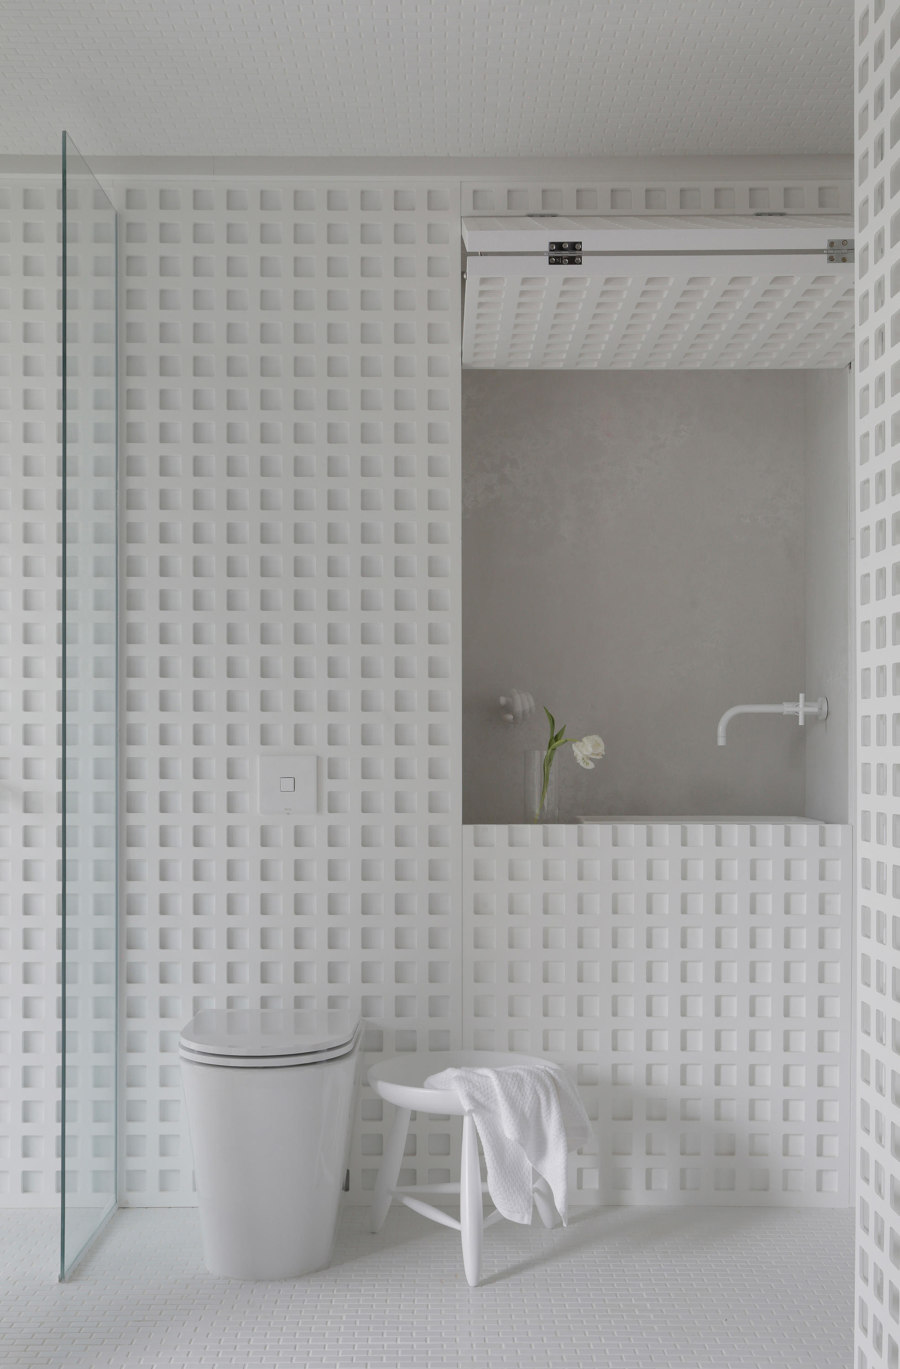 Ablution solutions: residential bathrooms up the design ante | Nouveautés